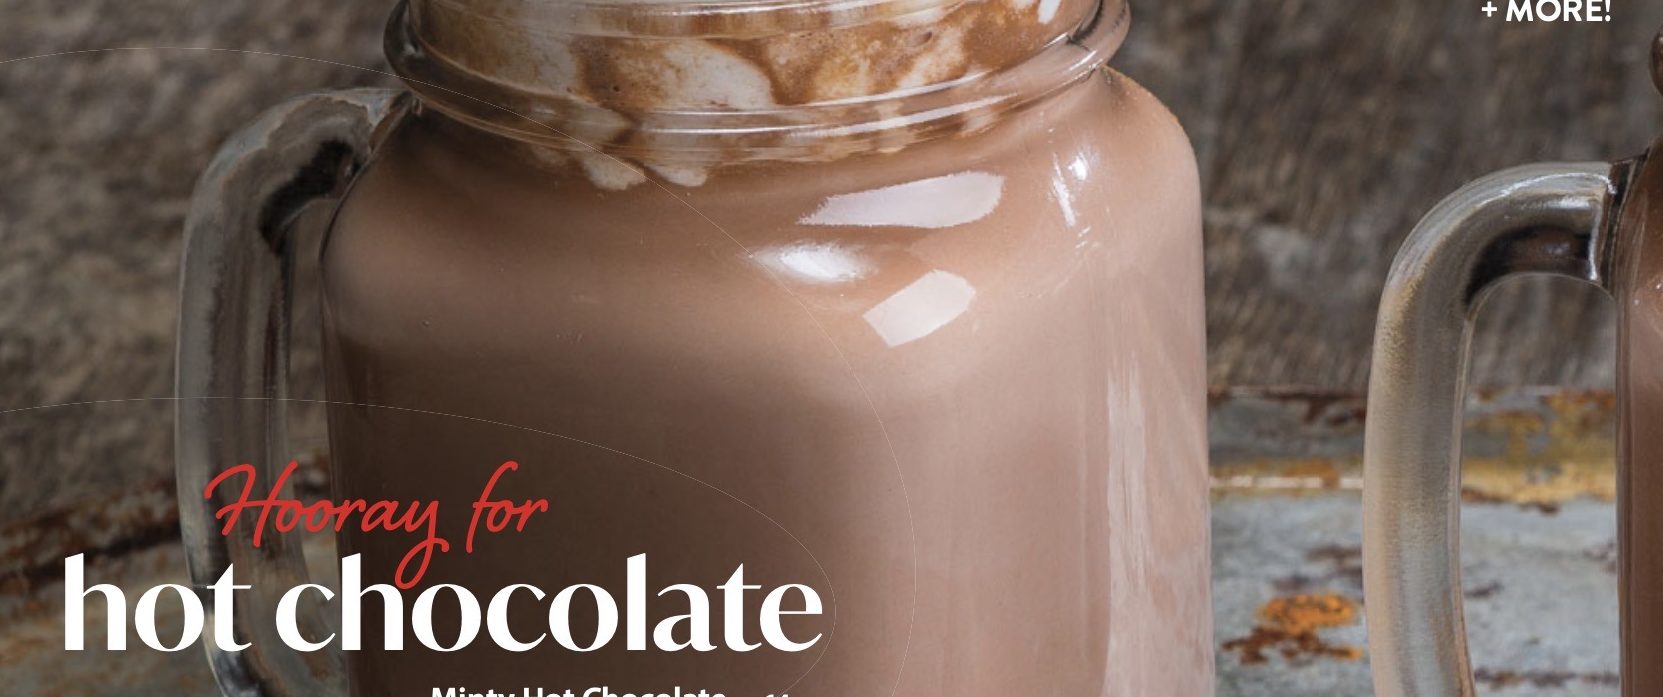 Hot chocolate image on magazine cover